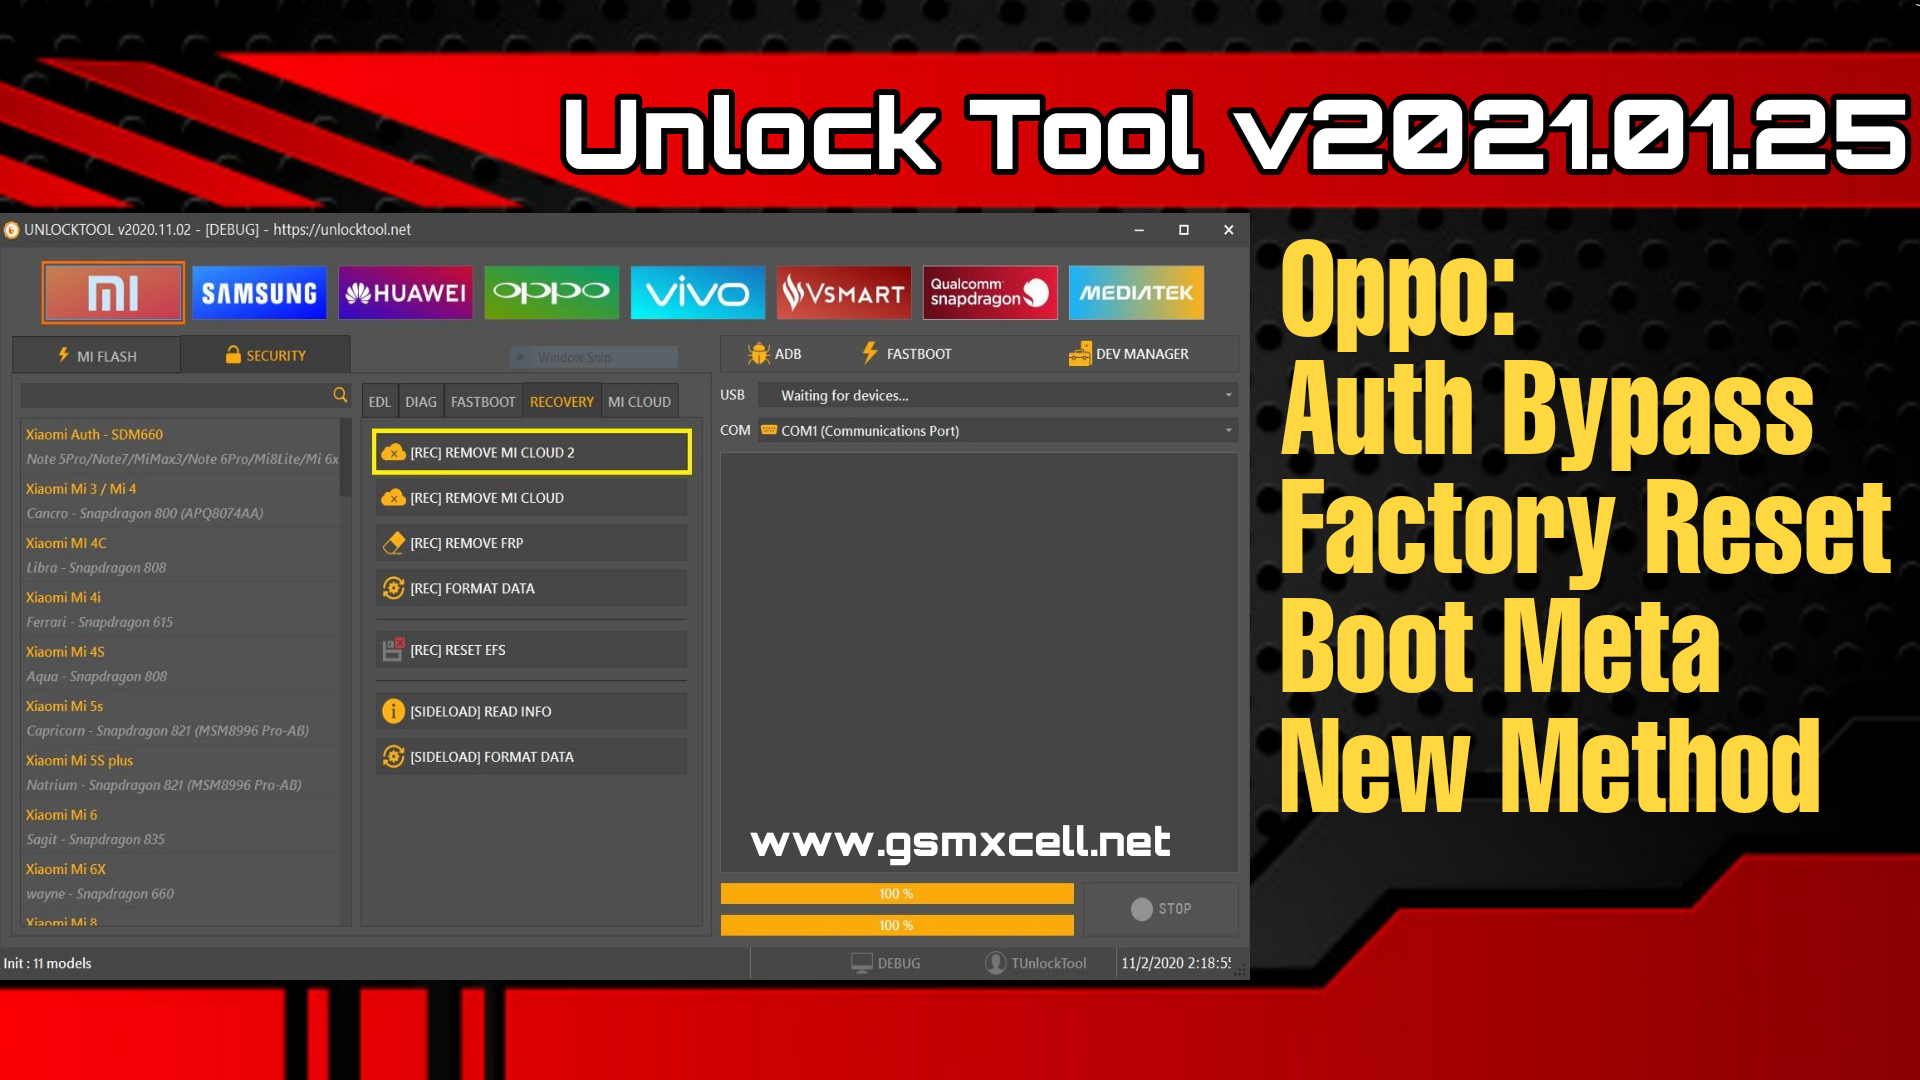 License tool. Unlock Tool. Unlock Tool 2022. Unlock Tool 2020. Программатор Unlock Tool.